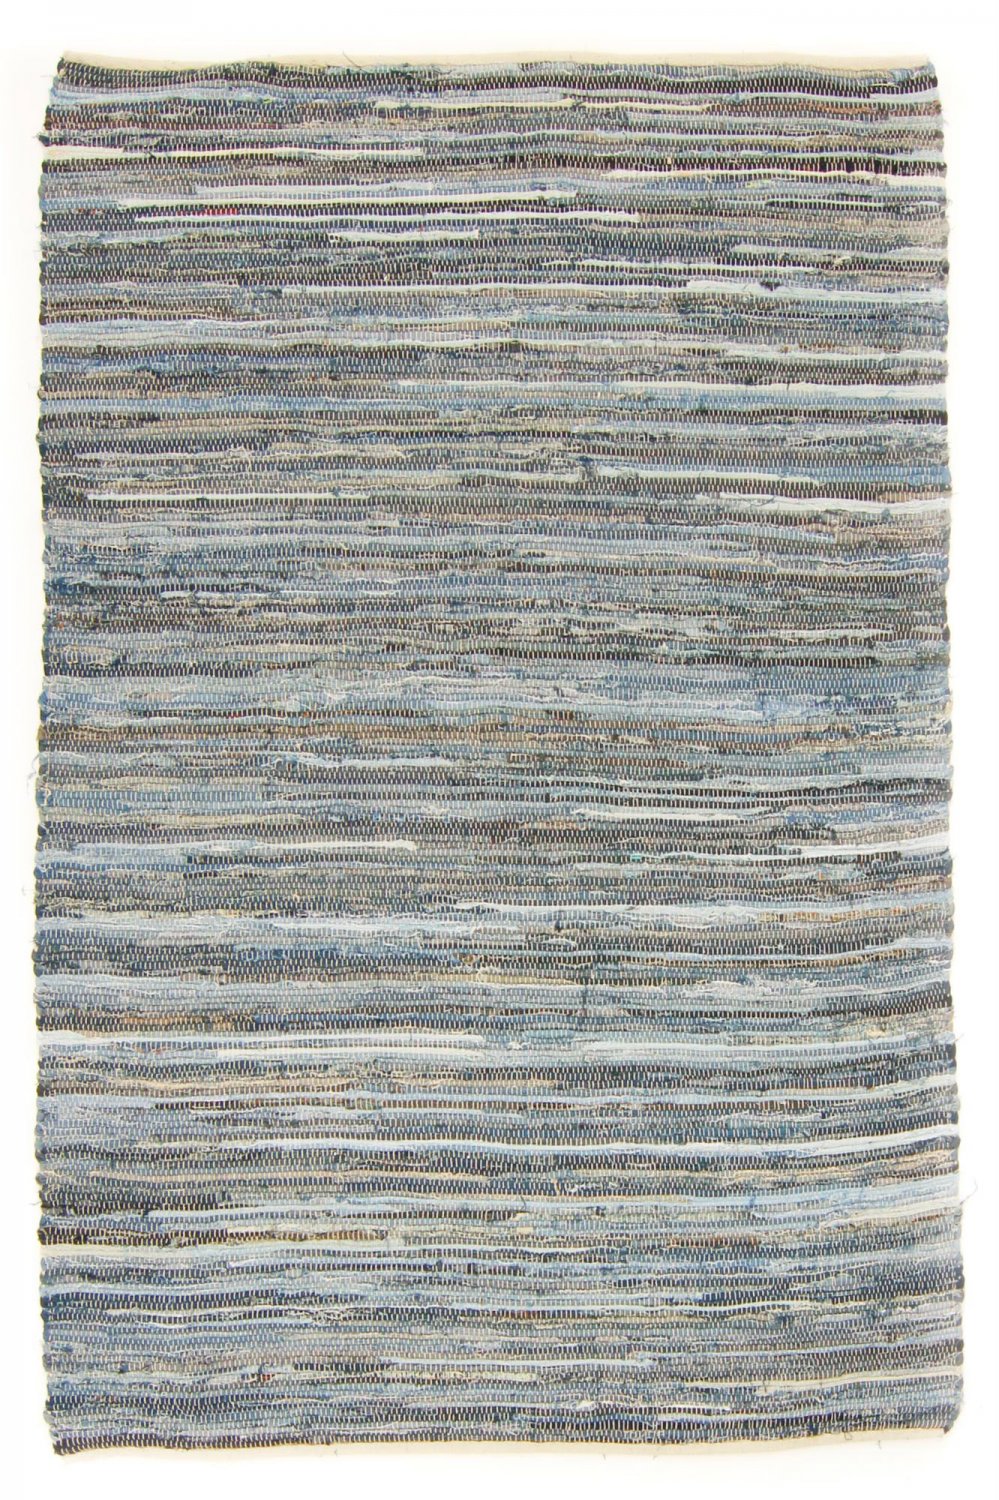 Rag rugs - Nordal Design Denim (jeans)